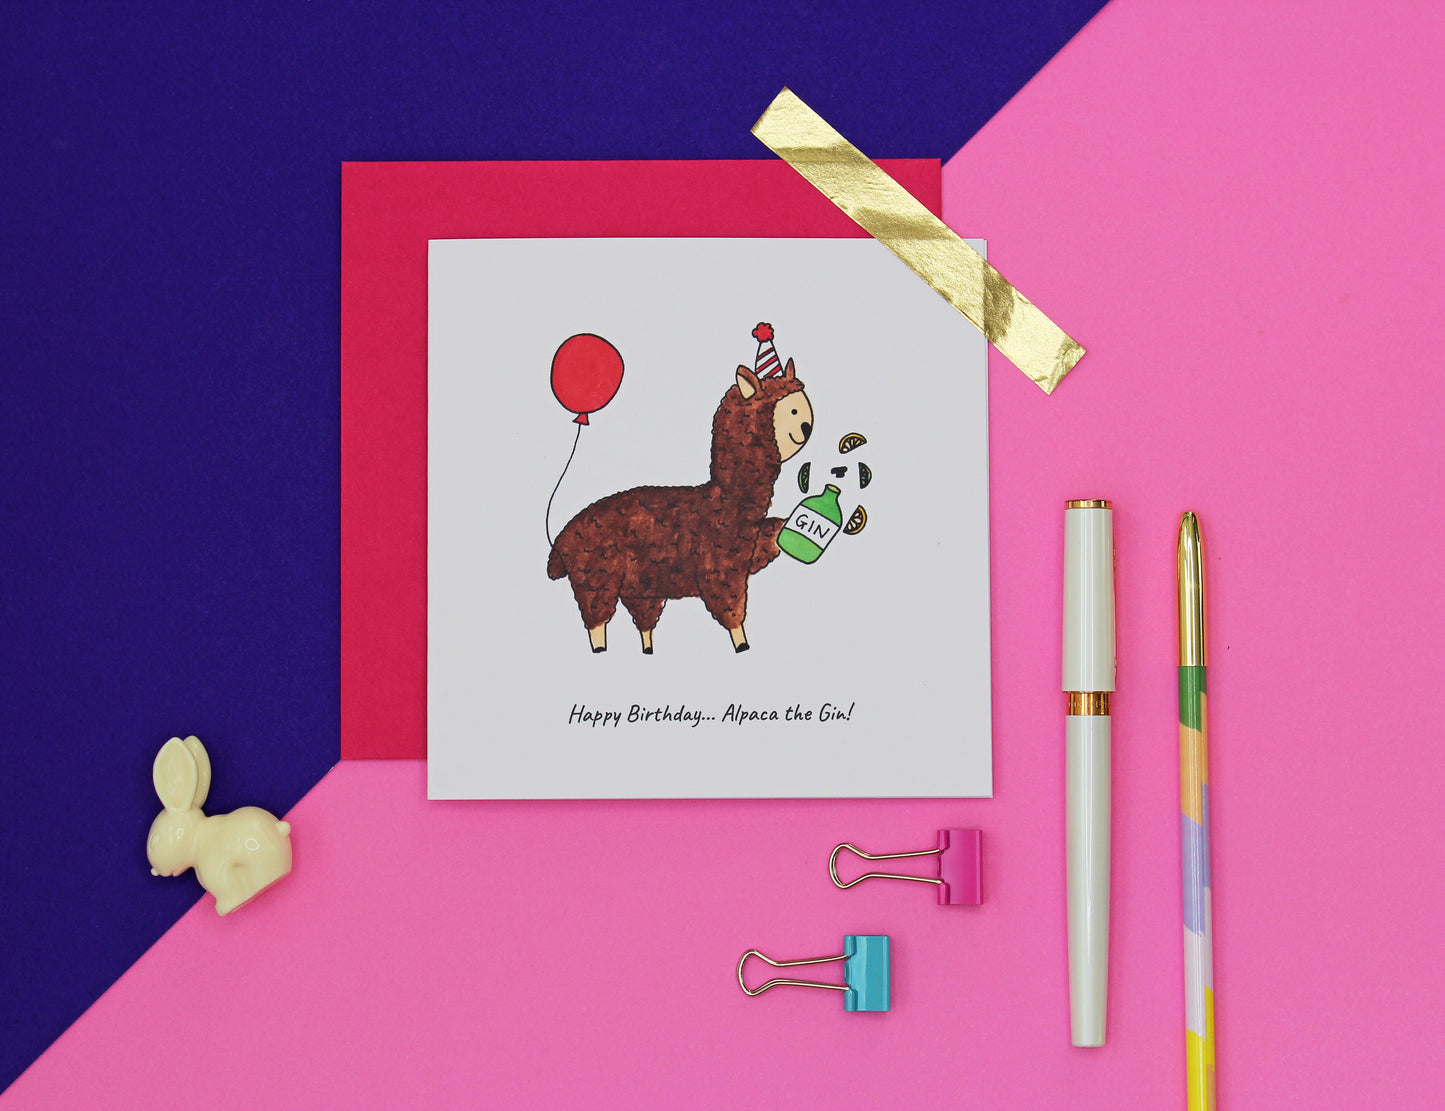 Alpaca the gin funny Birthday card